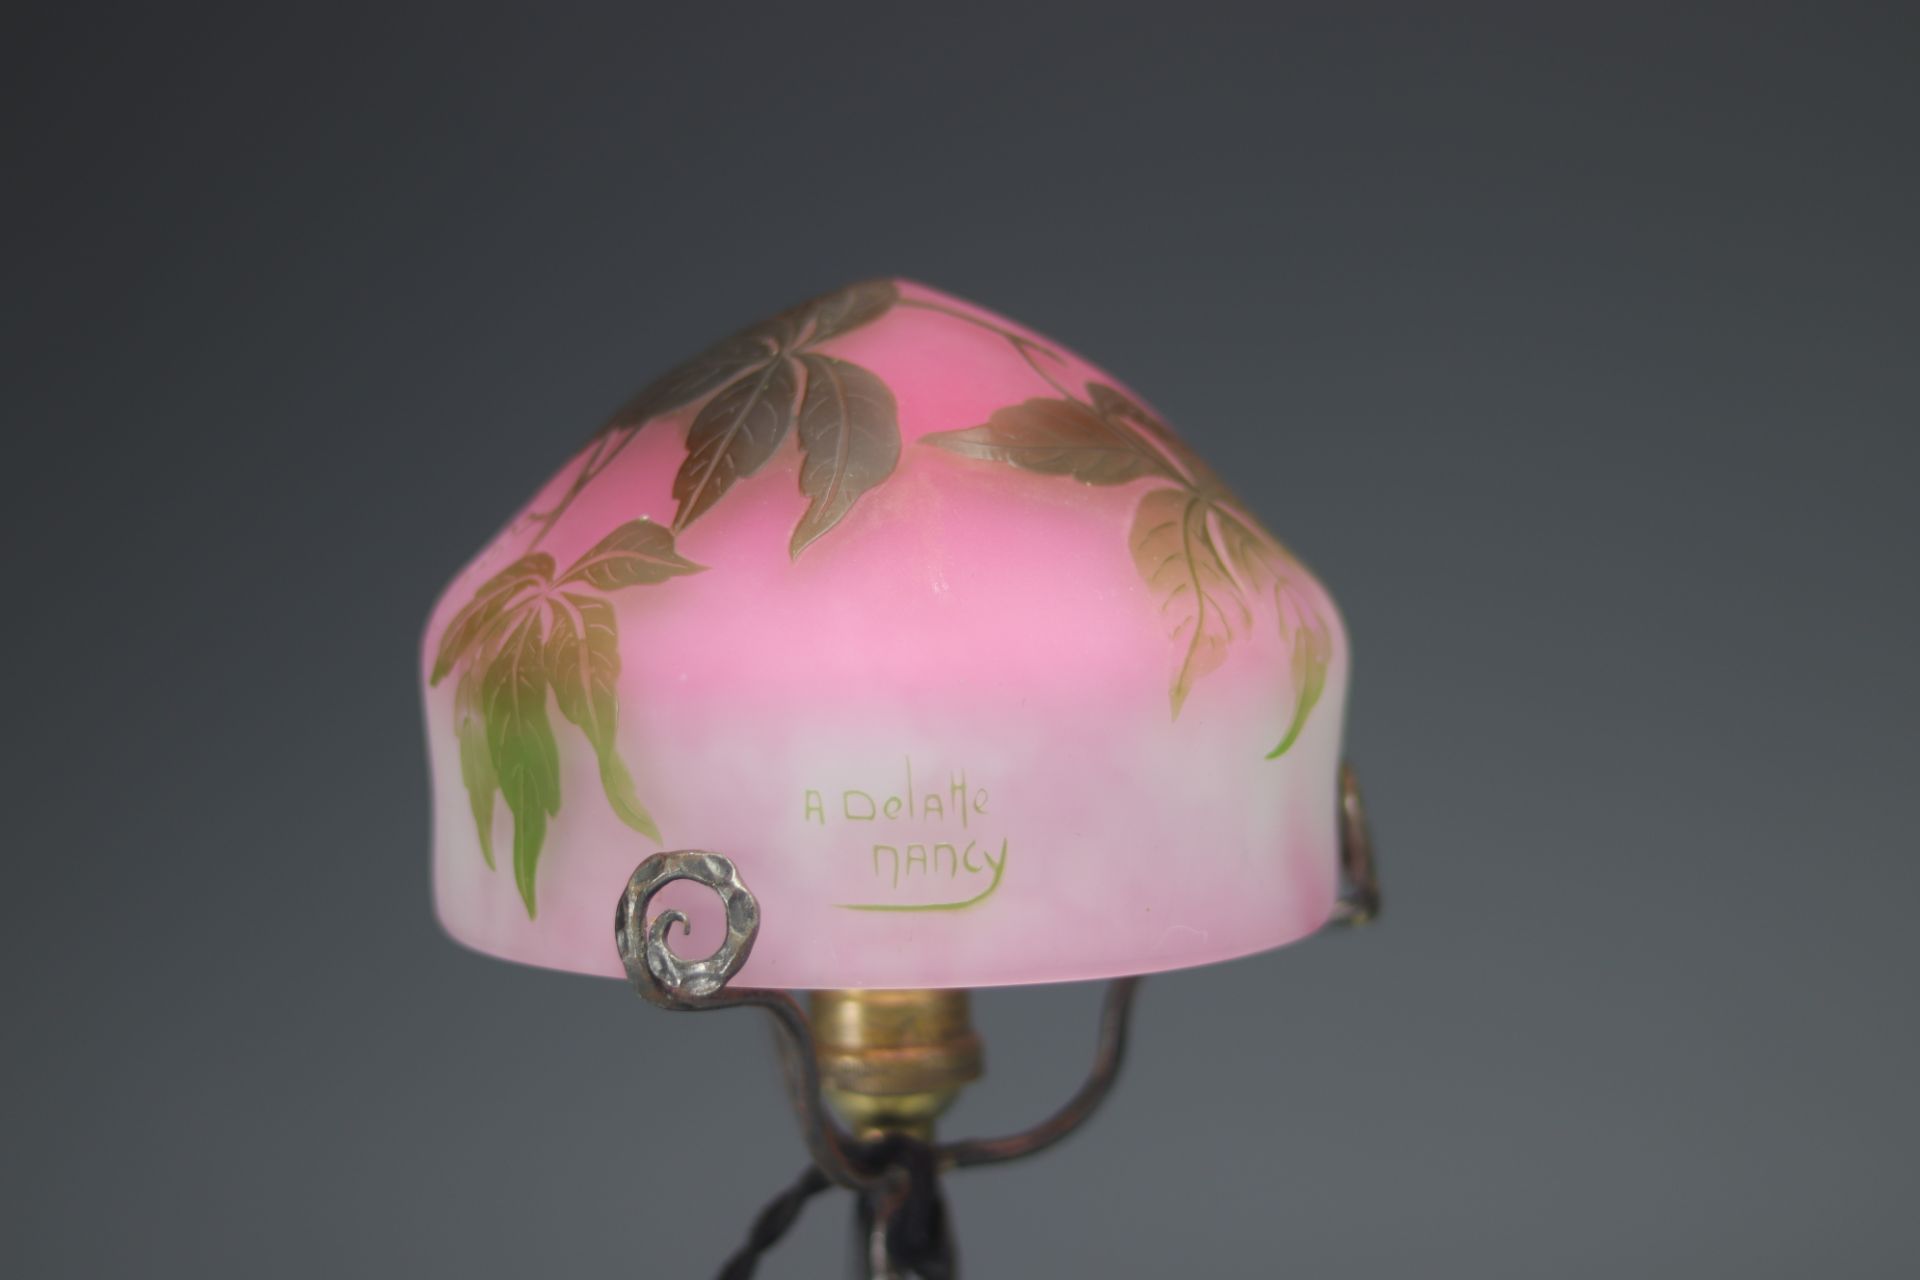 Delattre Nancy mushroom lamp with floral decoration - Bild 5 aus 5